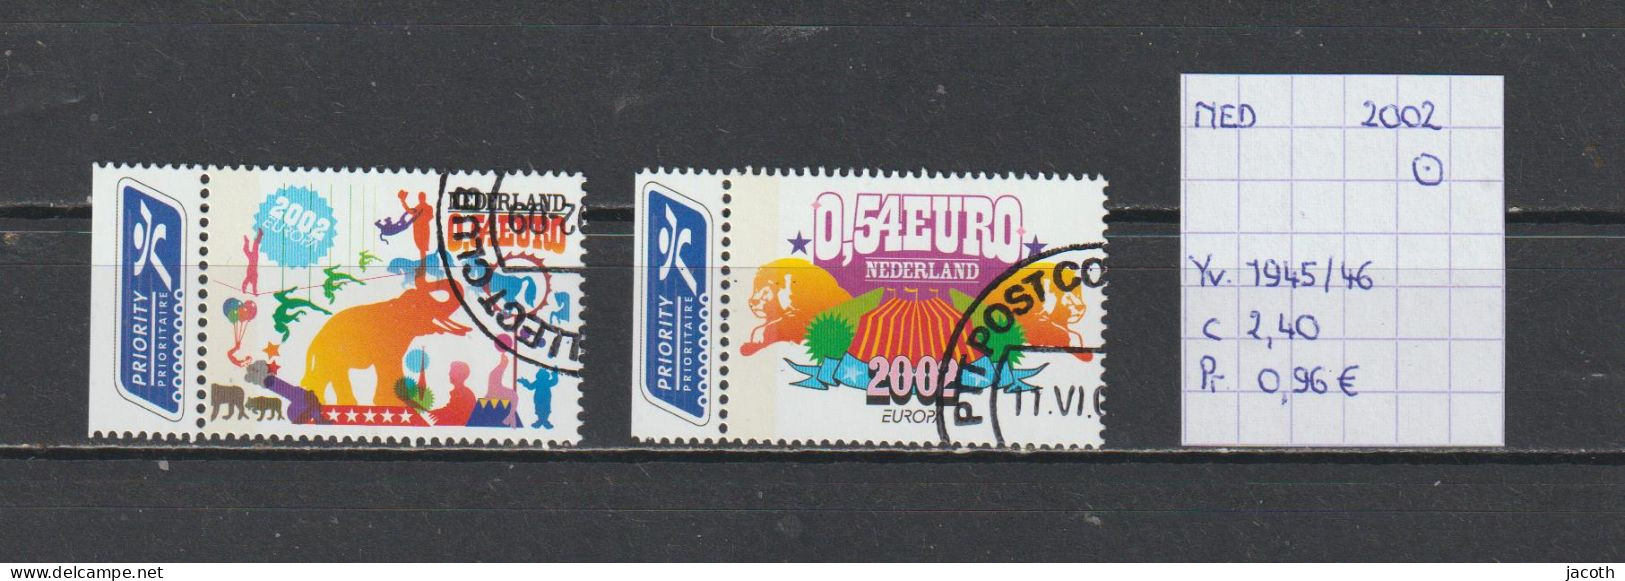 Nederland 2002 - YT 1945-46 (gest./obl./used) - Gebruikt